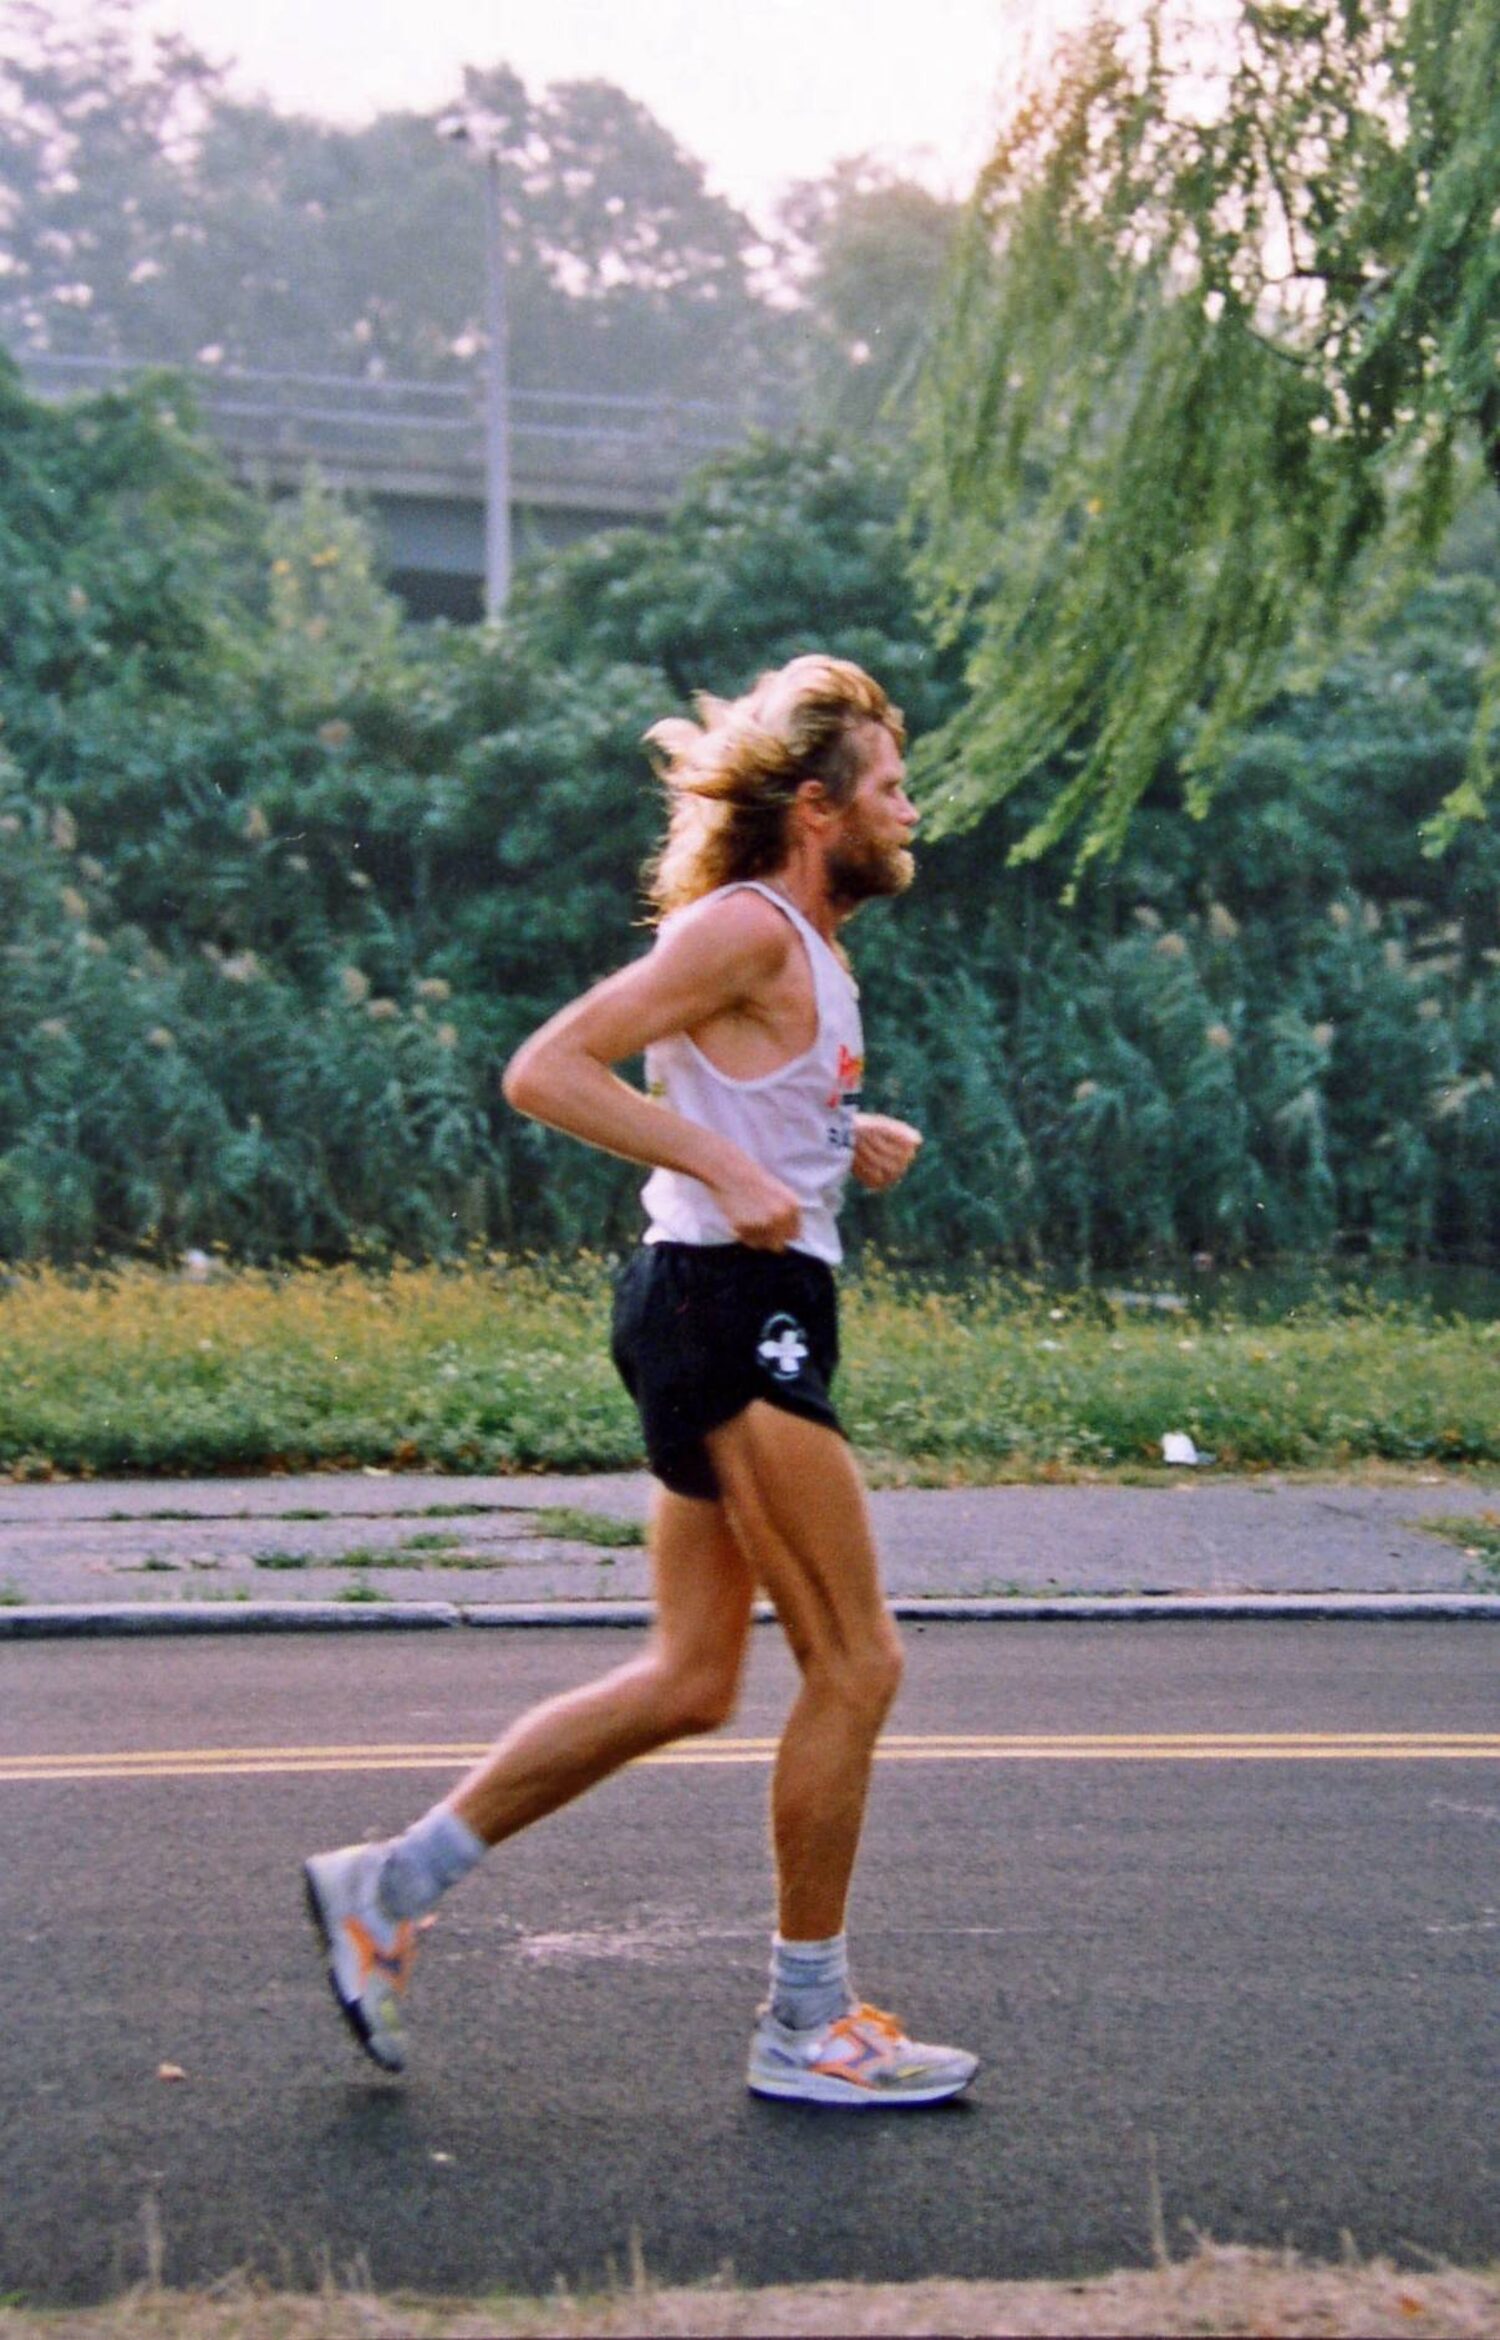 Al Howie was an eccentric ultramarathoner who ran across Canada